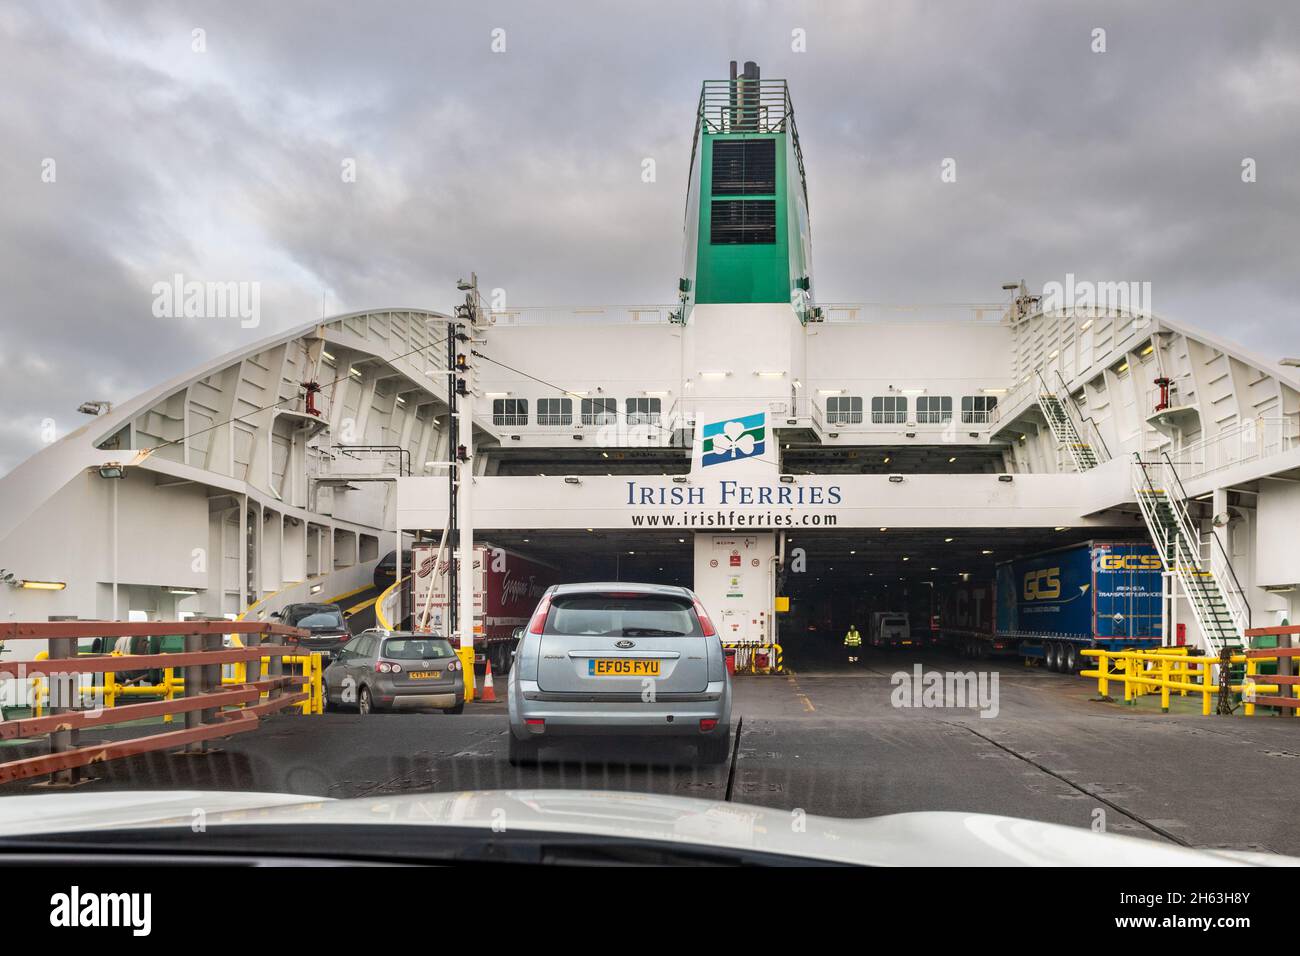 Boarding Irish Ferries ship 'Ulysses' at Holyhead Port, North Wales, UK. Stock Photo